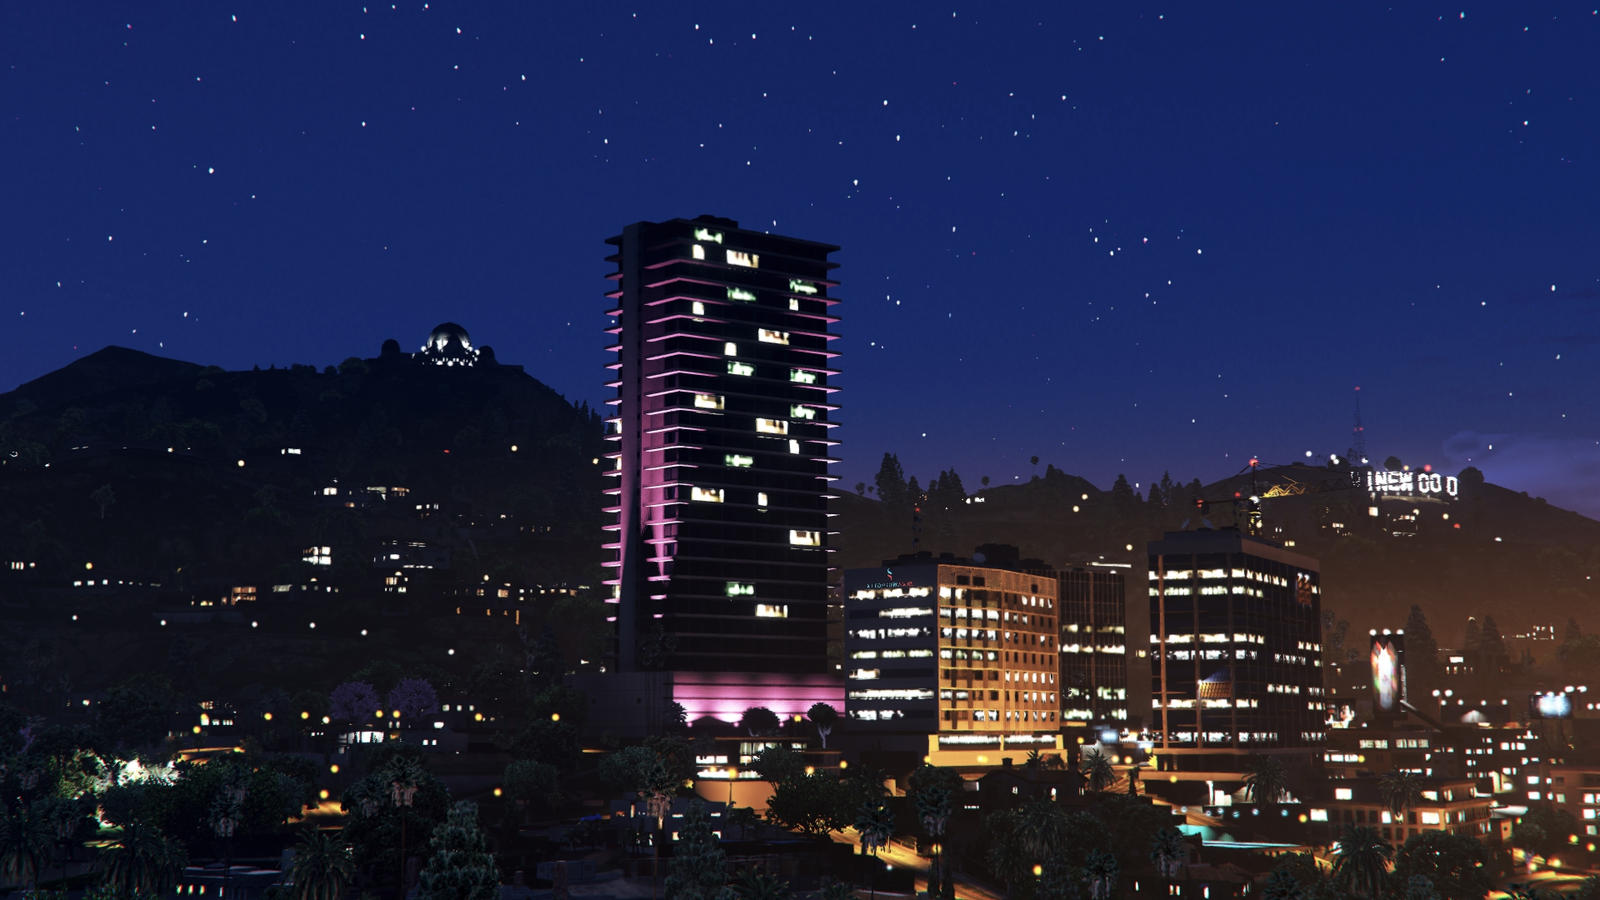 Los Santos (Downtown Skyline). by Remyras on DeviantArt